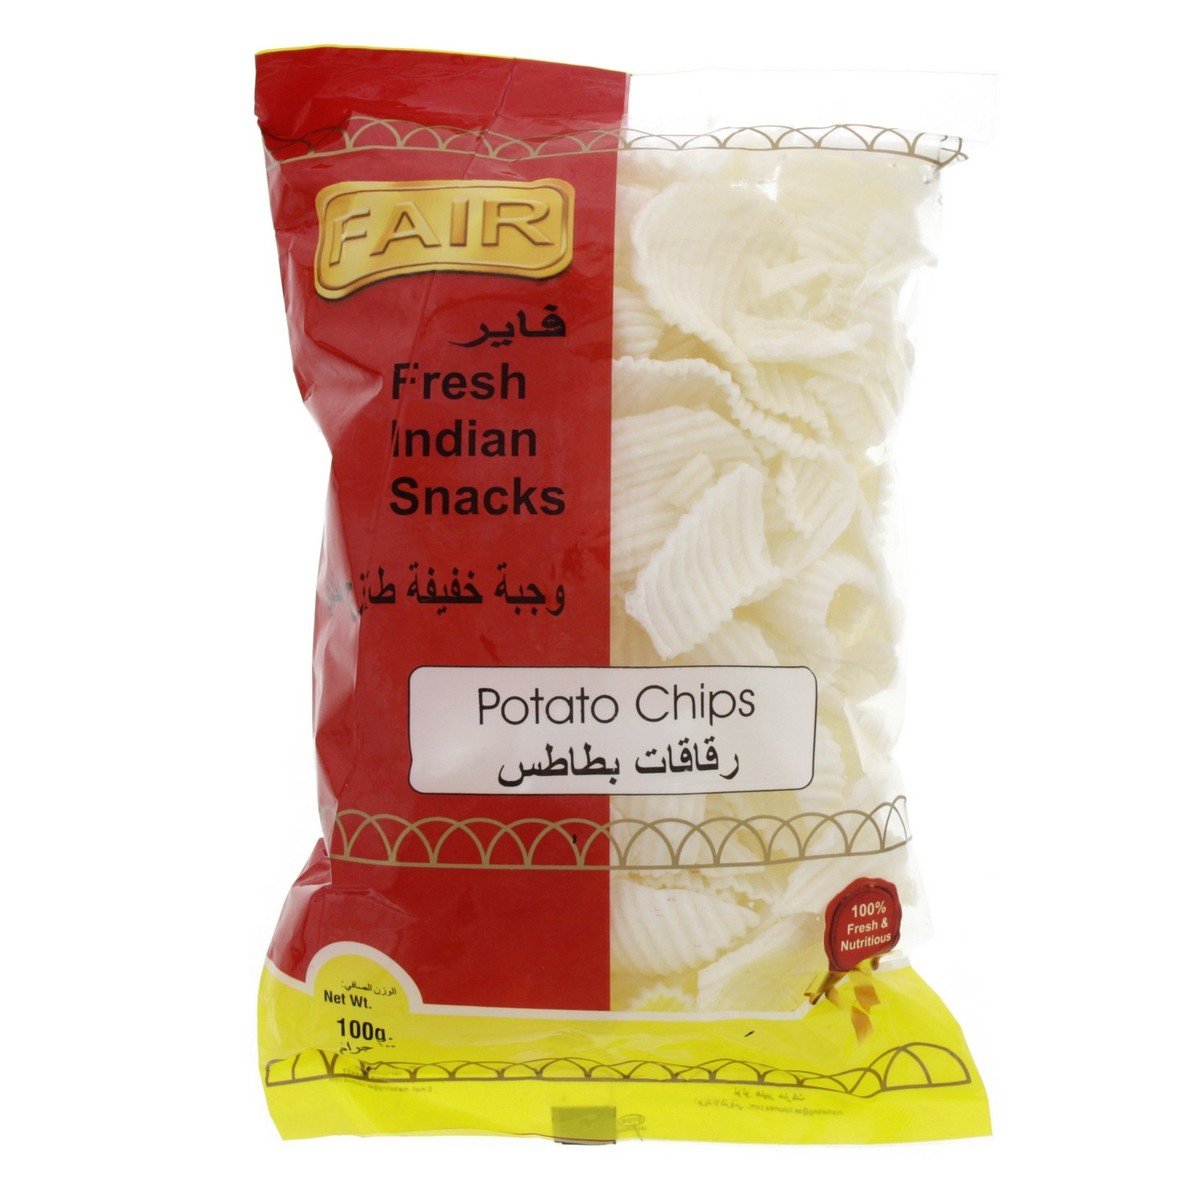 Fair Potato Chips 100 g